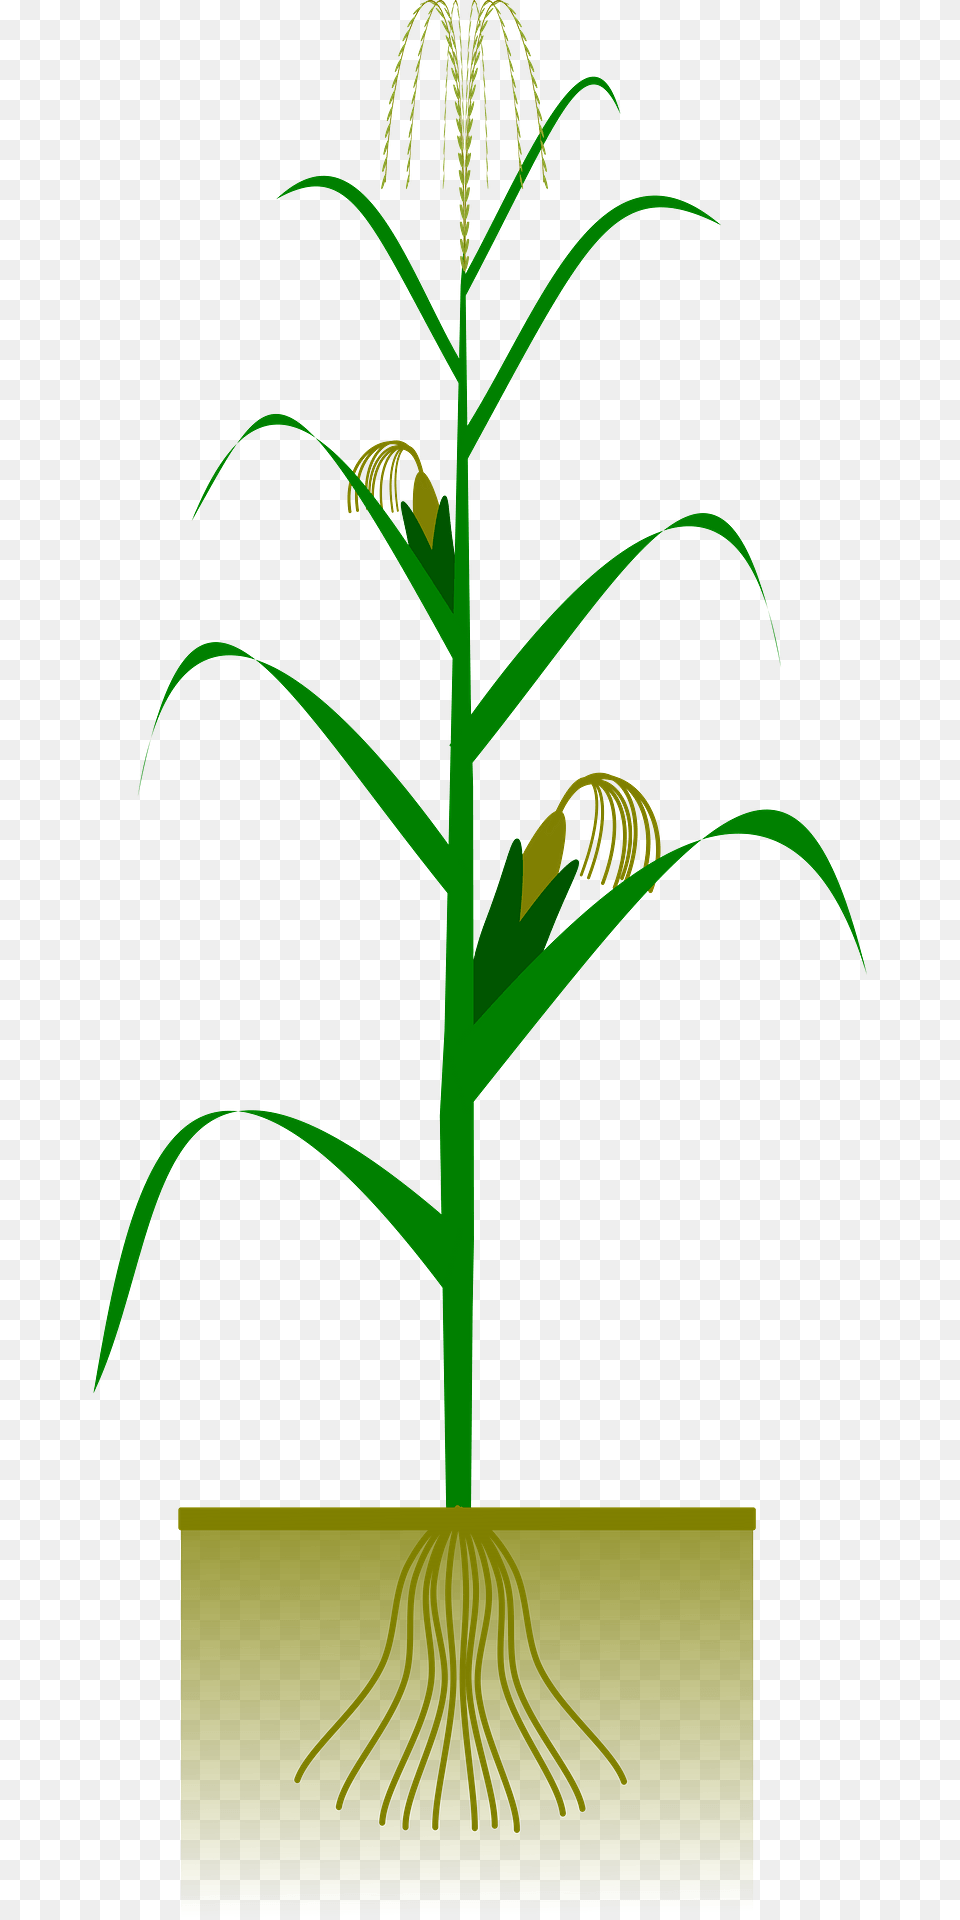 Maize Plant Clipart, Grass, Leaf, Vegetation, Tree Free Transparent Png